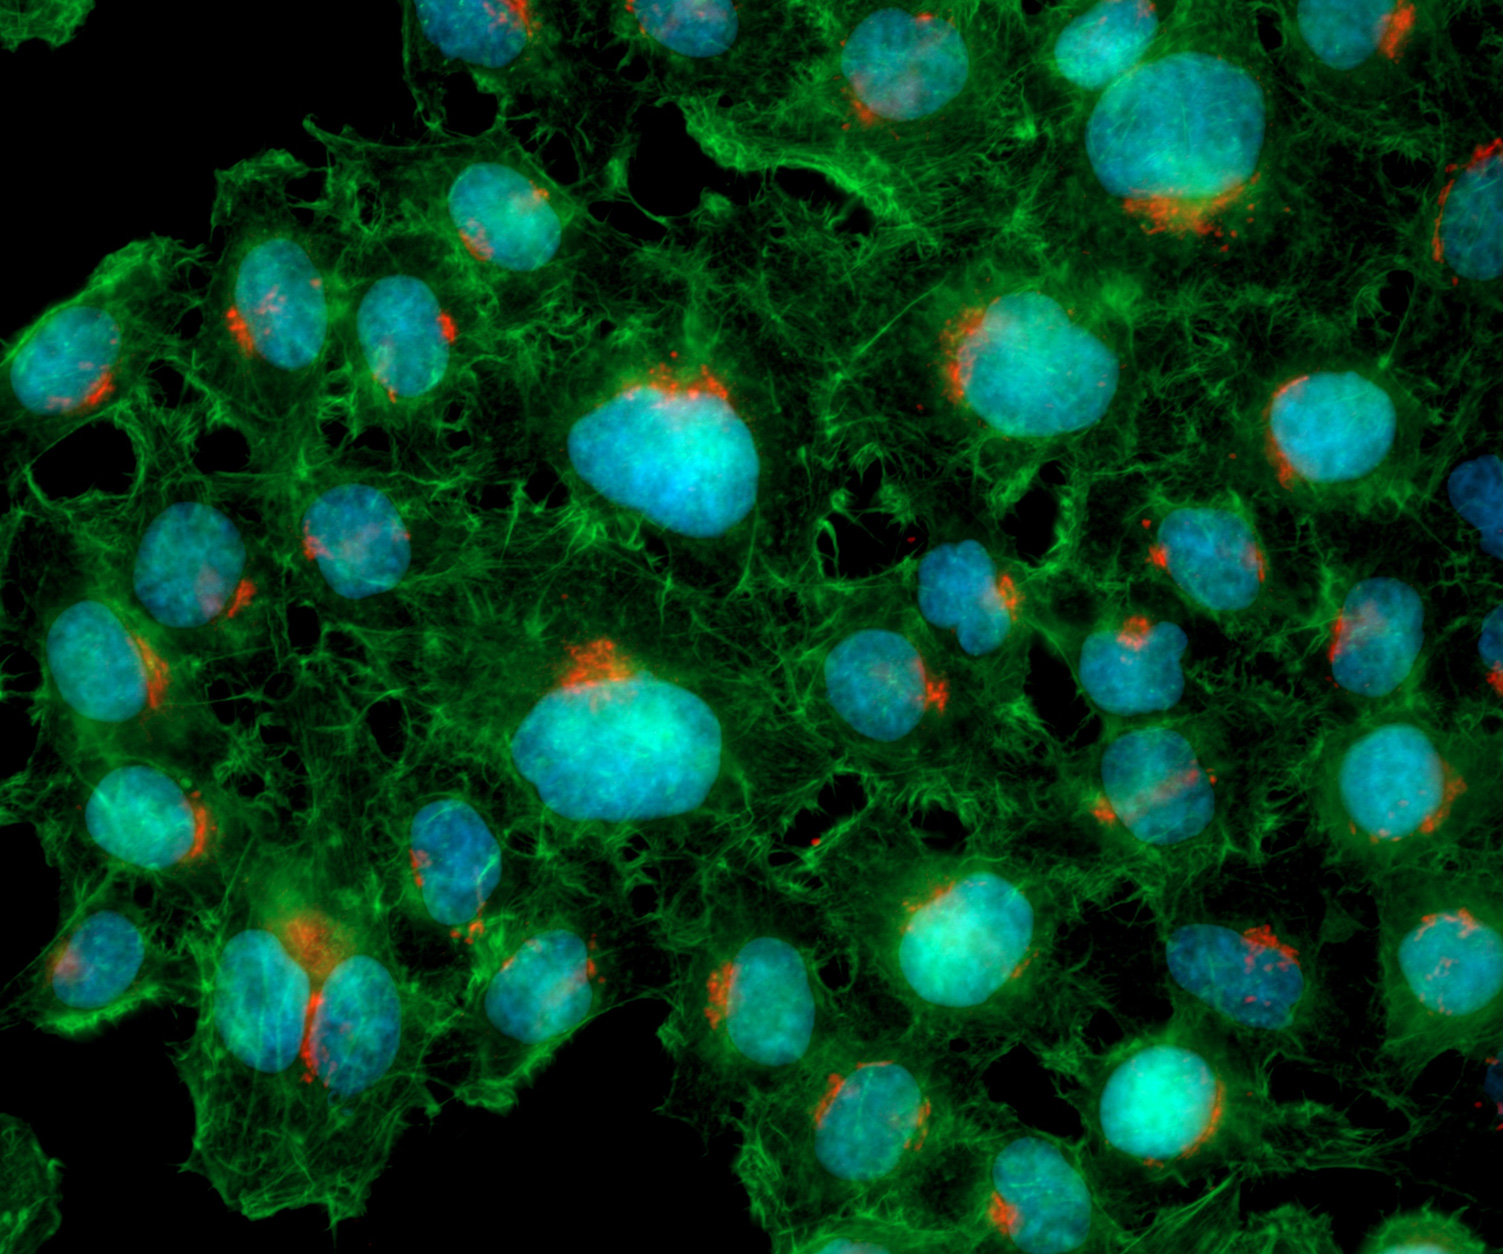 Fixed cultured HeLa cells. Blue: DNA (DAPI), green: F-actin (phalloidin-Alexa Fluor 488), red: trans Golgi network (TGN-Alexa Fluor 561) 